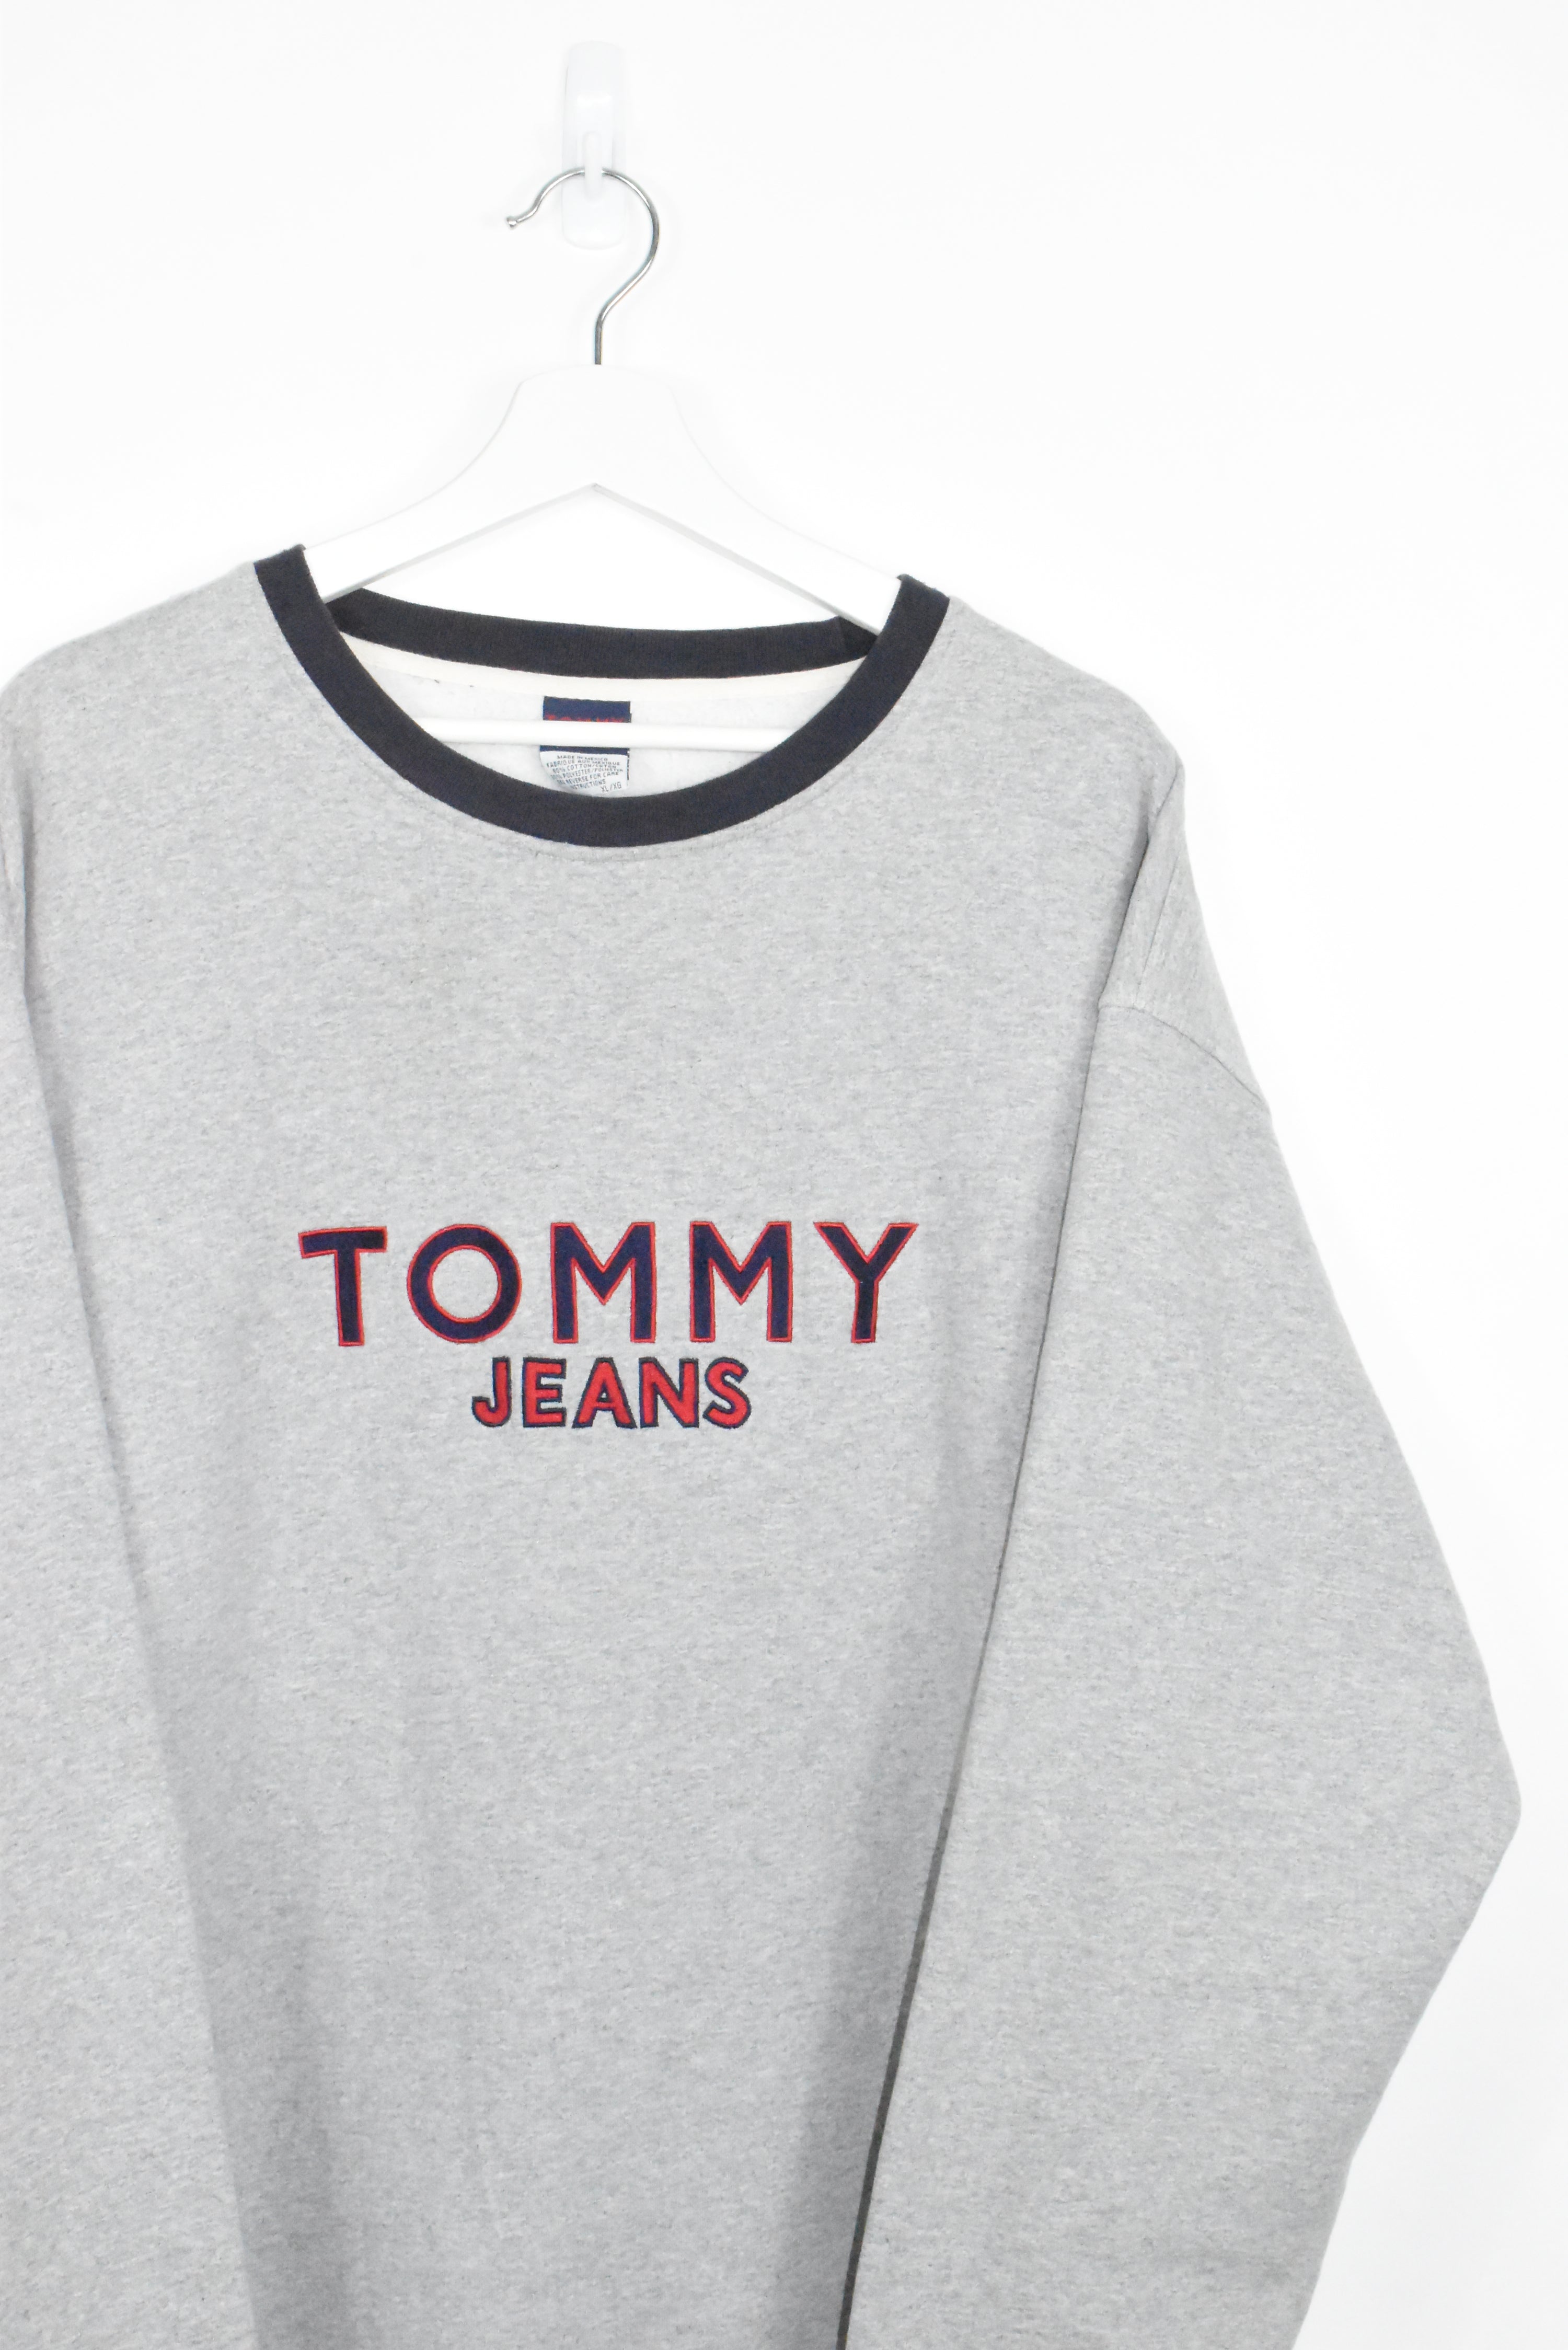 Vintage Tommy Jeans Embroidered Spellout Sweatshirt XL - REVIVED Vintage est. 2020